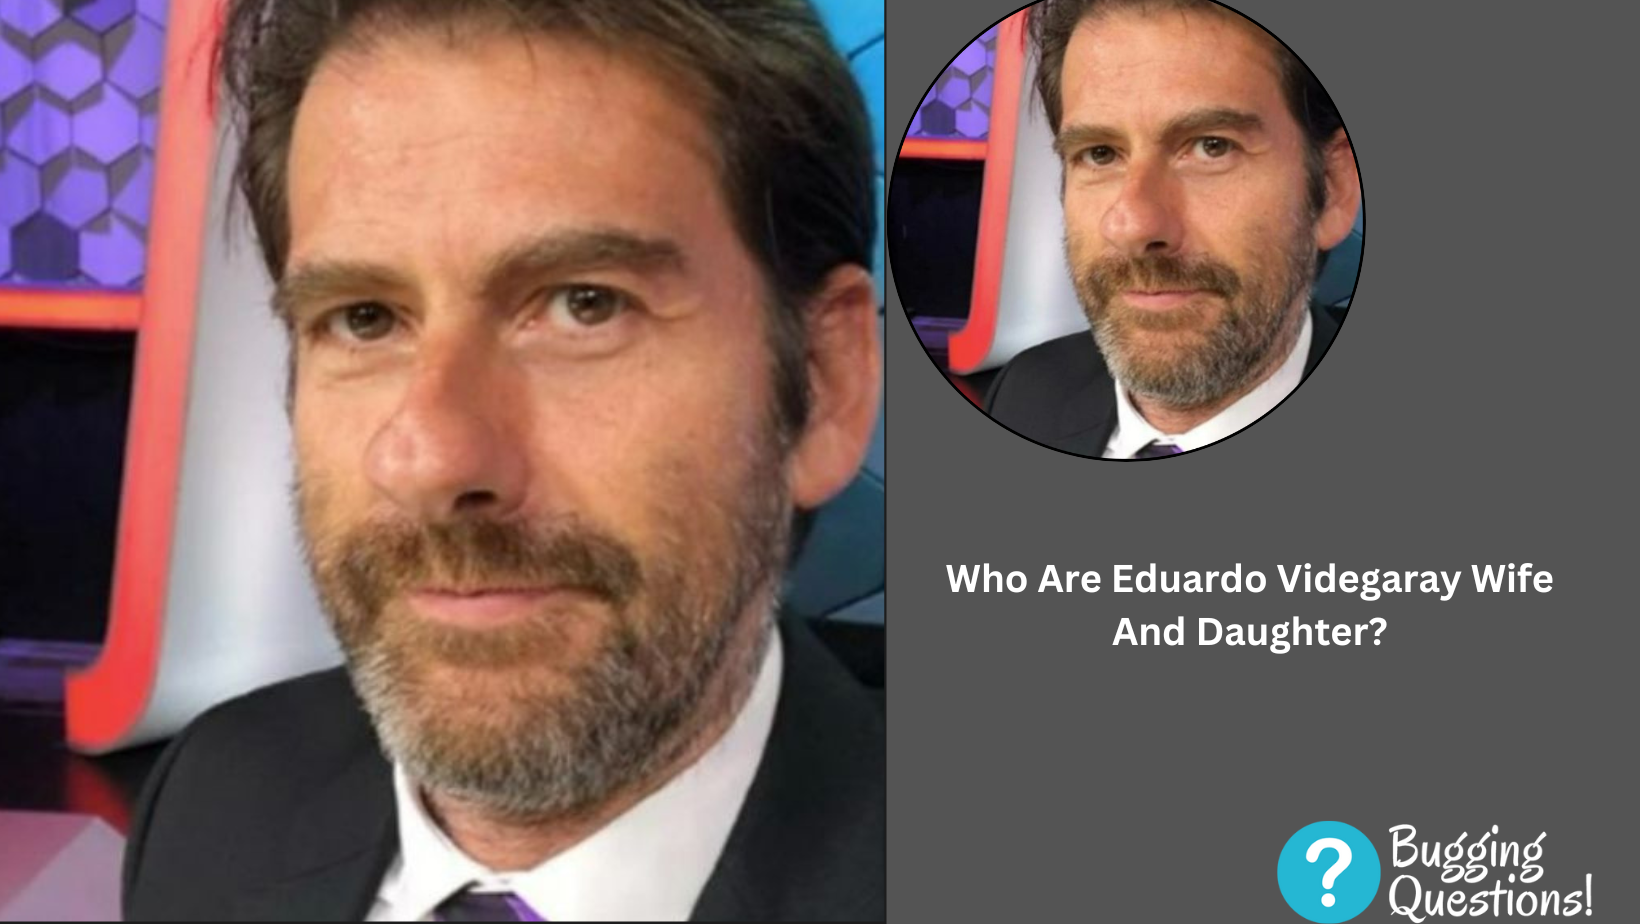 Who Are Eduardo Videgaray Wife And Daughter?